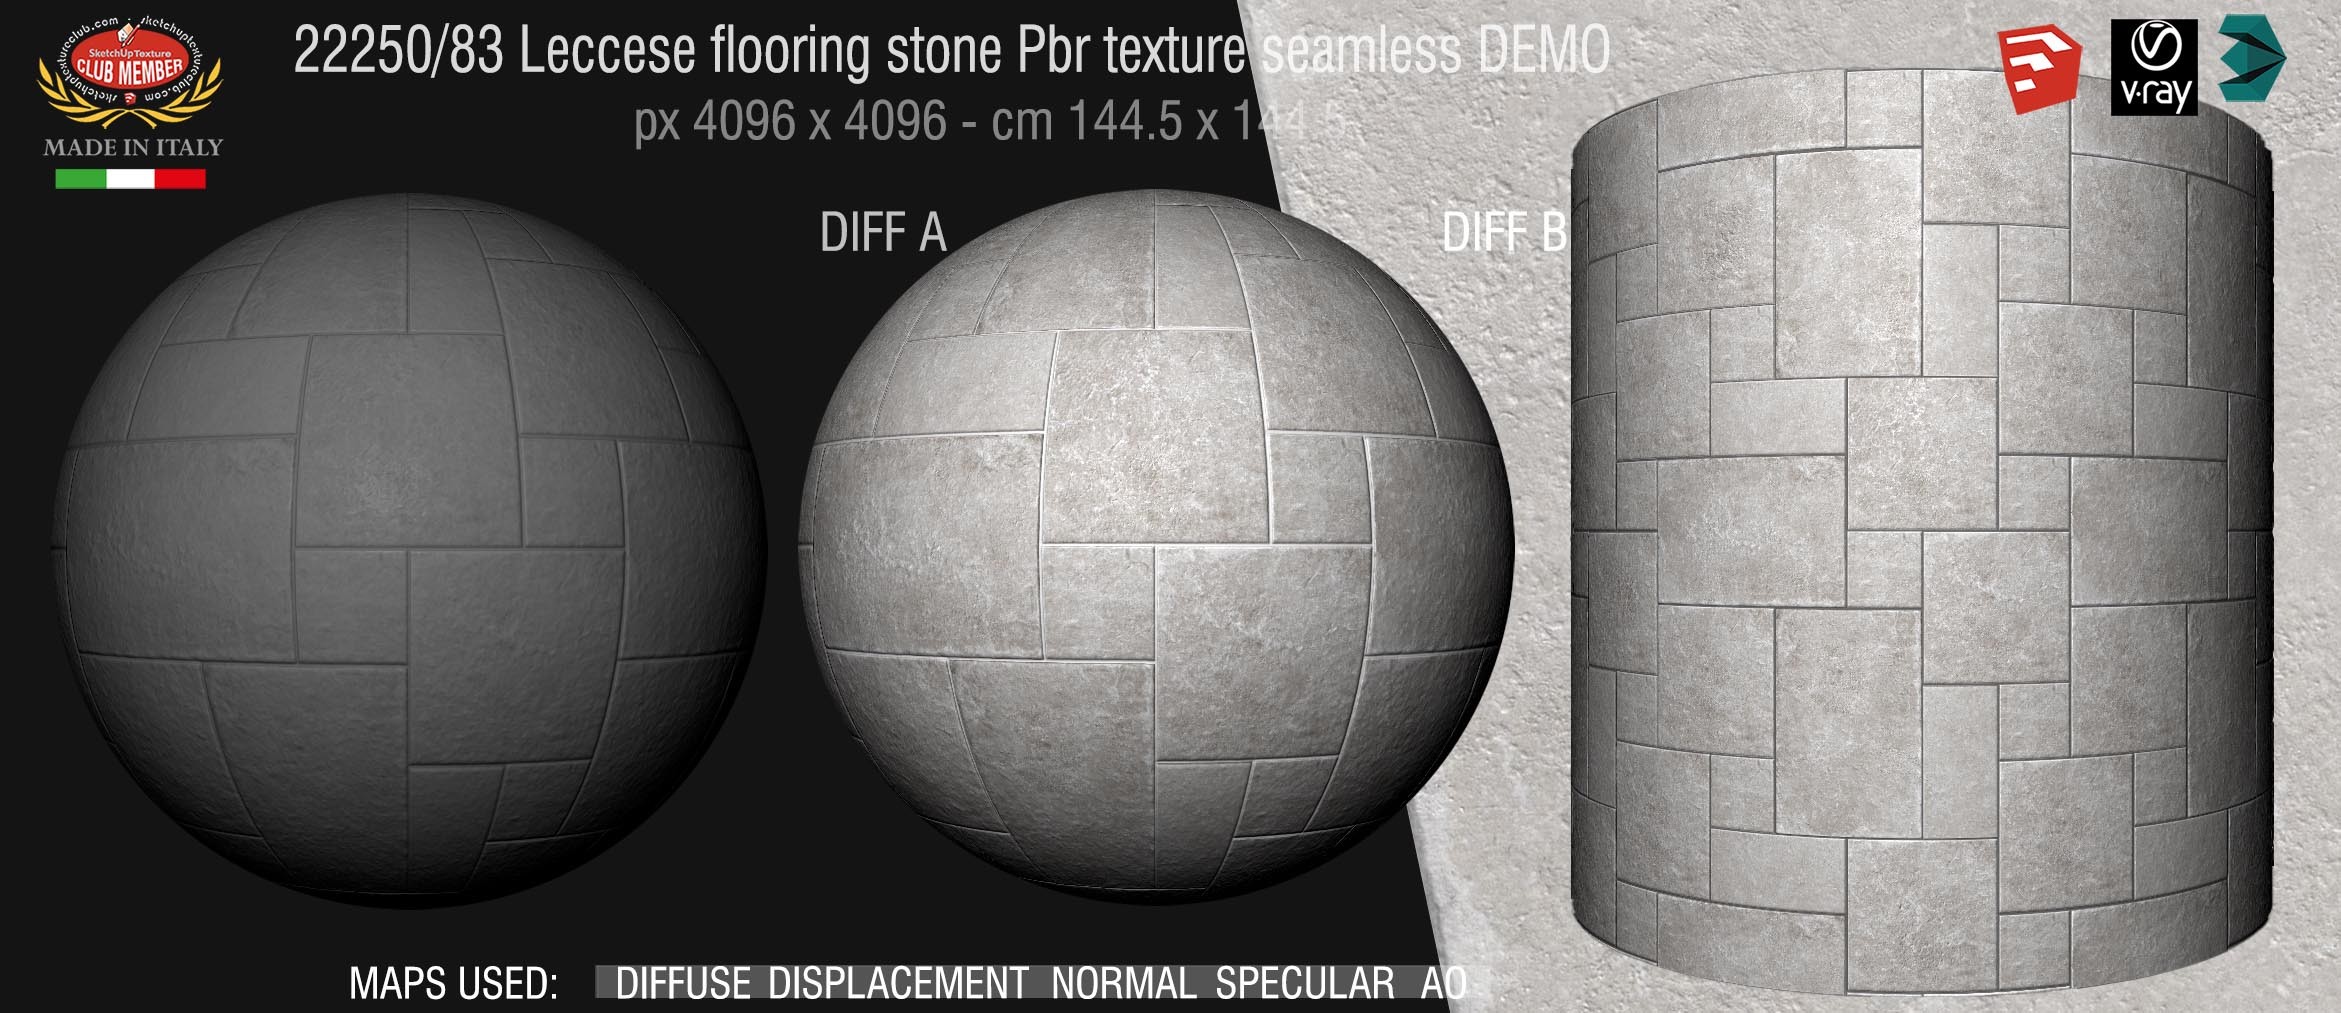 22250_83 Leccese flooring stone Pbr texture seamless DEMO - Limestone